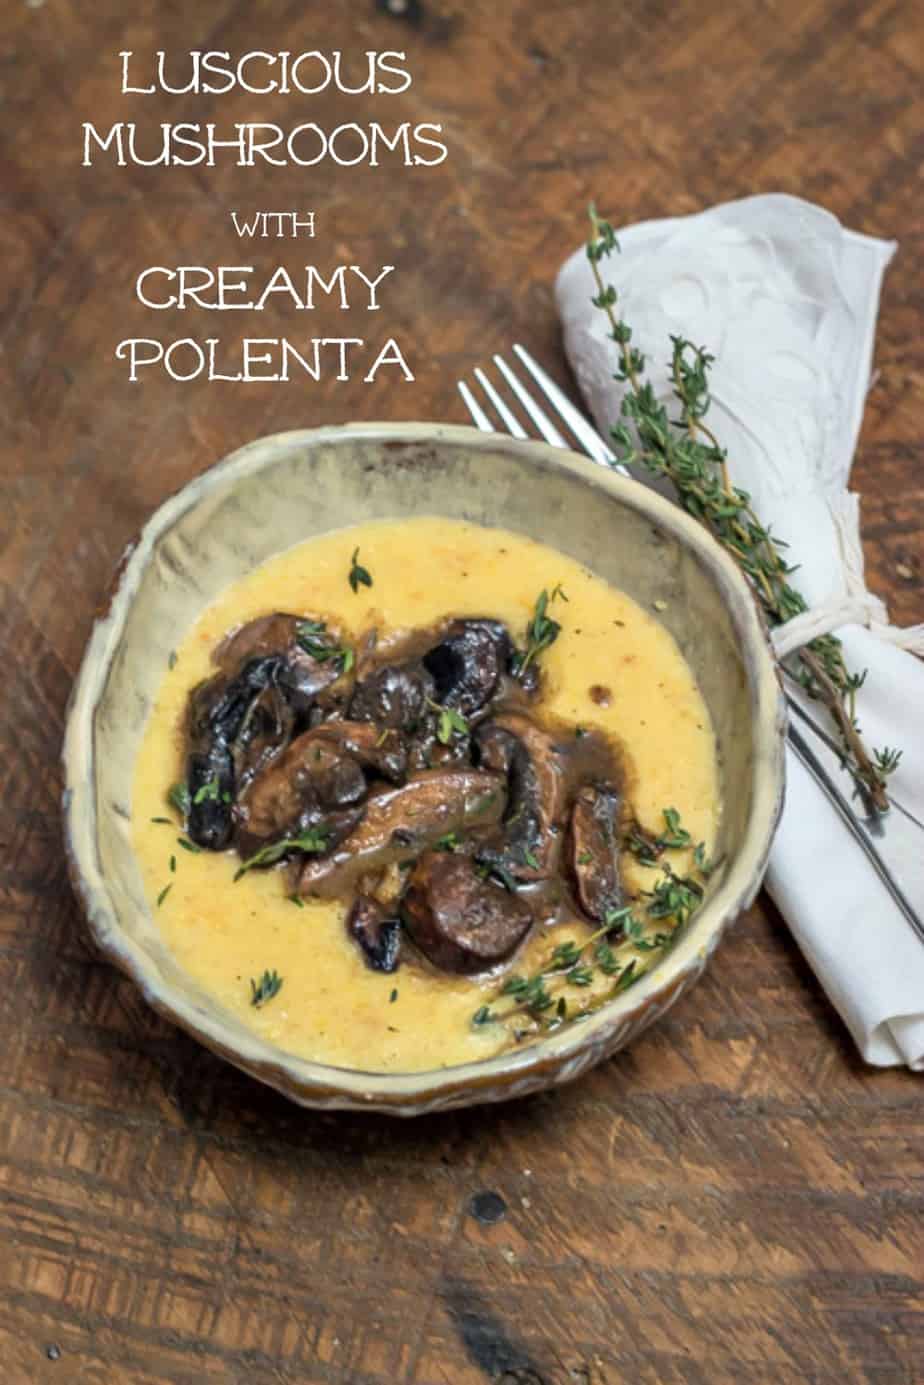 Luscious Mushrooms with Creamy Polenta is a delicious sautéed mushroom recipe, perfect as a vegetarian weeknight meal. #mushrooms #sautéed #recipe #vegetarian